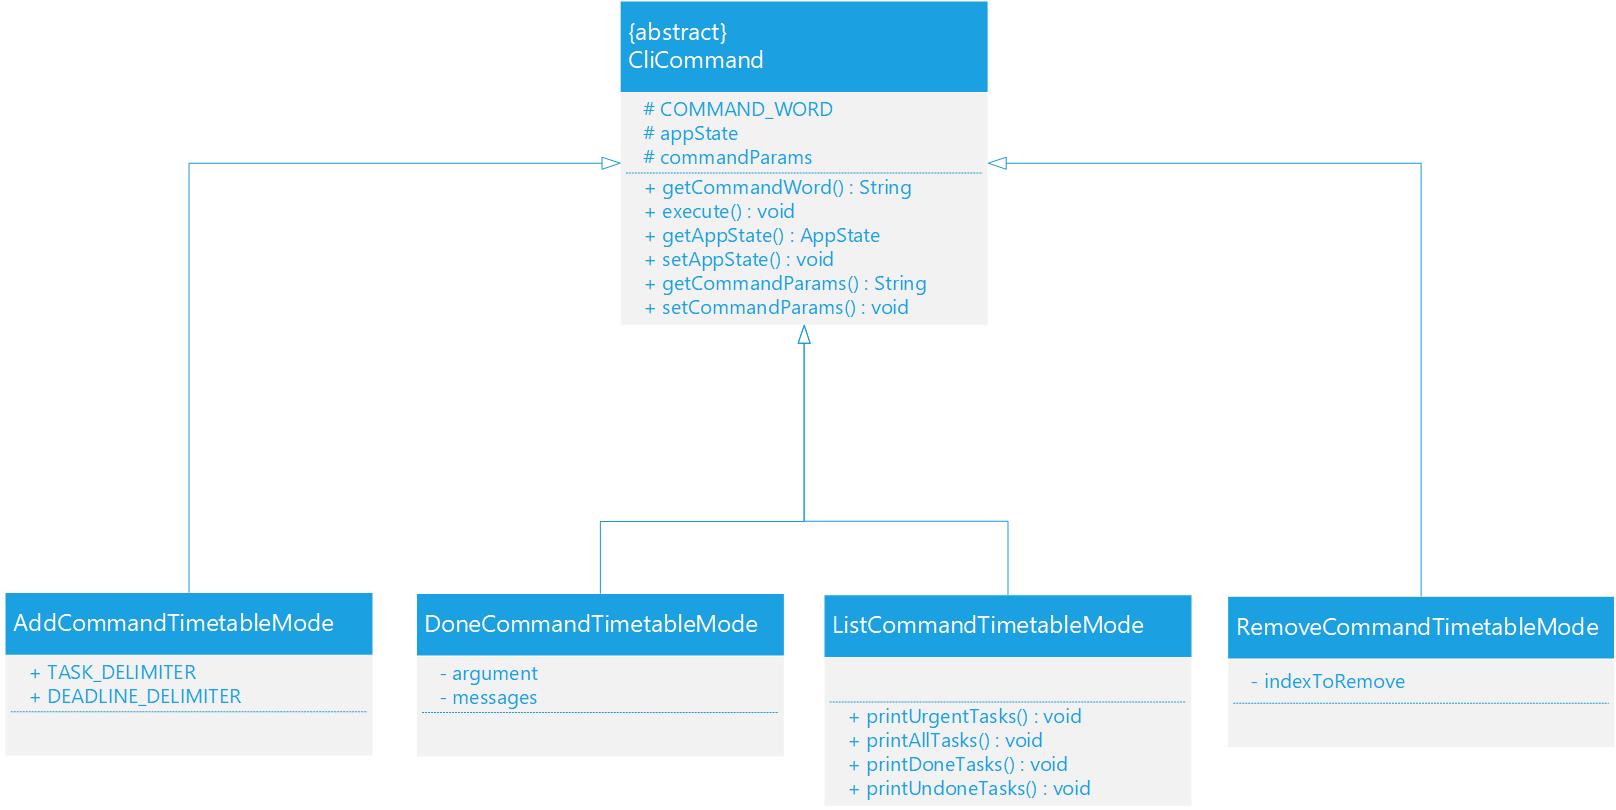 UML diagram for Timetable Commands